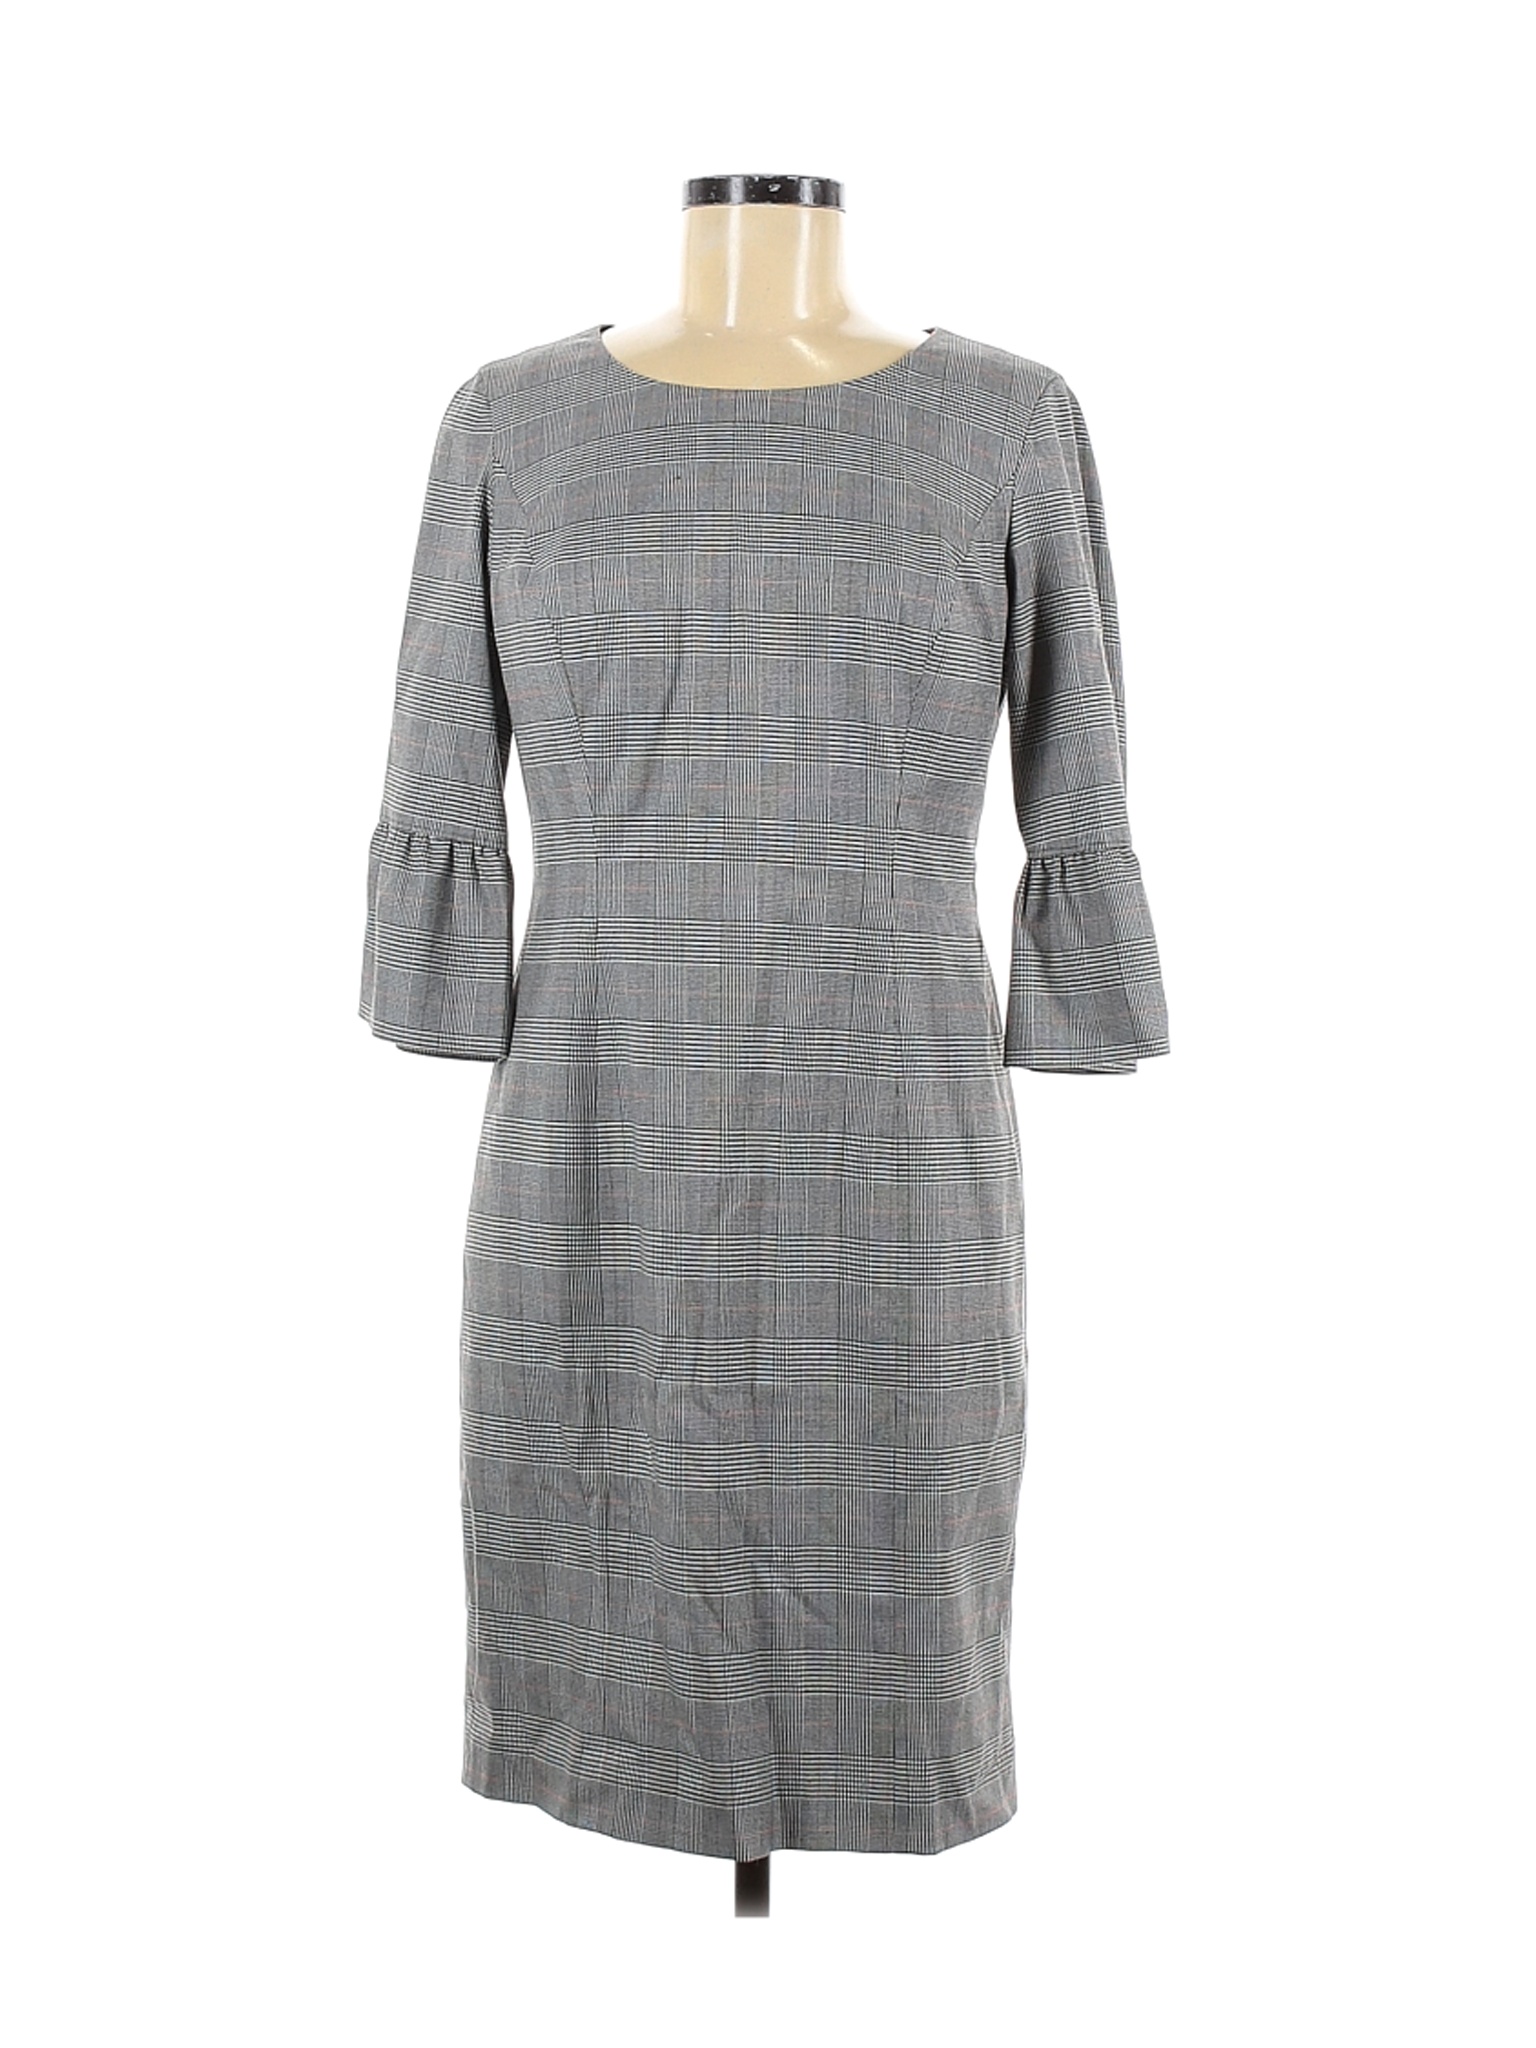 NWT Talbots Women Gray Casual Dress 6 Petites | eBay